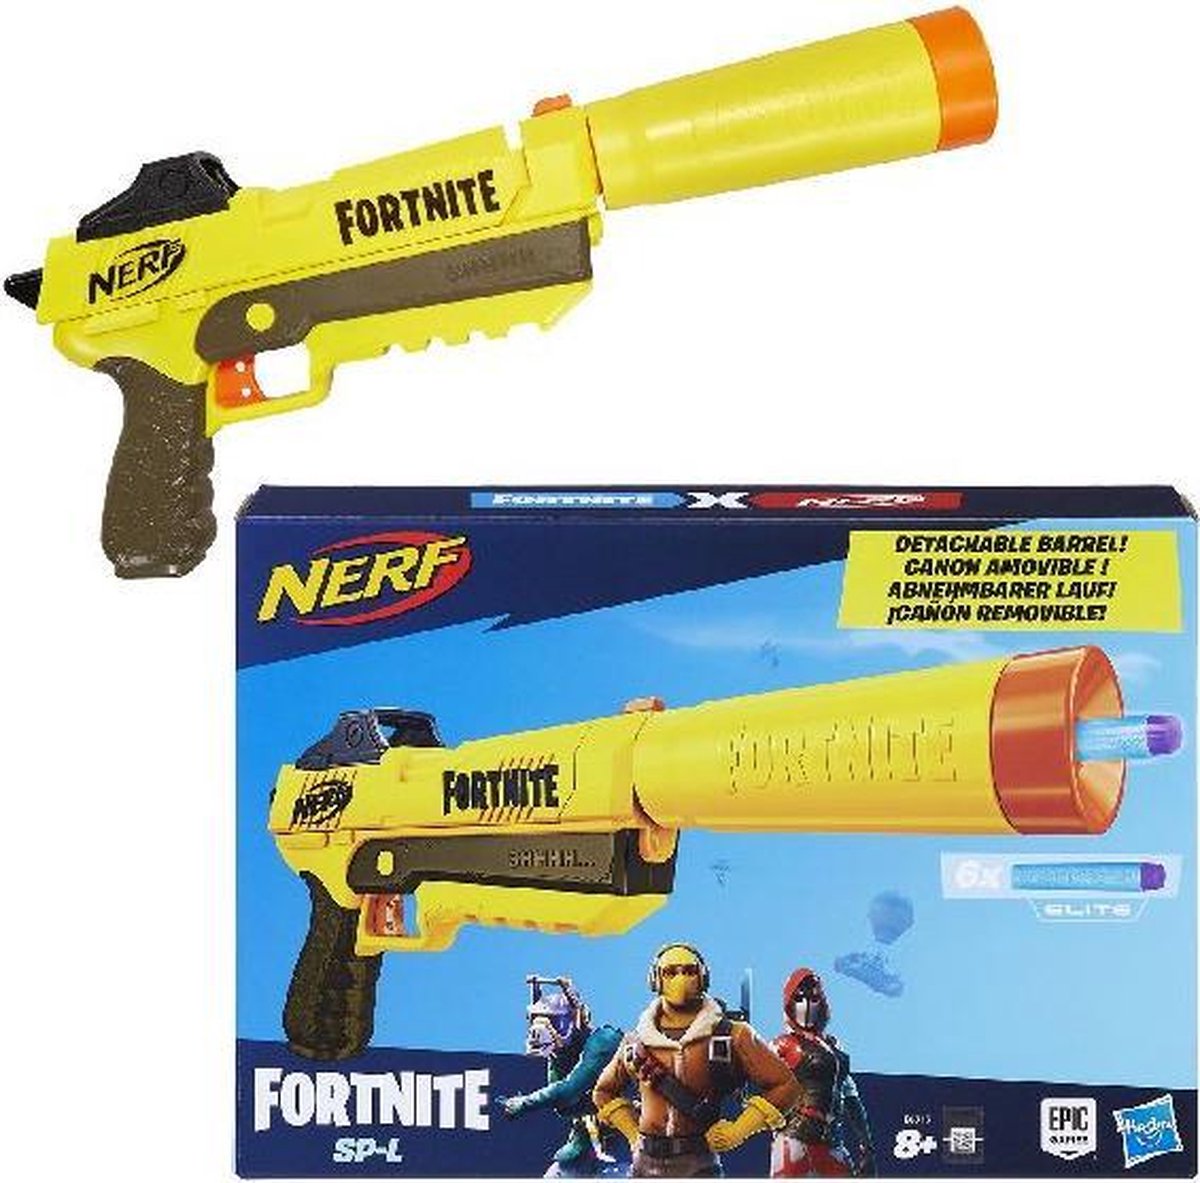 Pistolet Nerf Zombie Flipfury, Nerf et jeux de tir